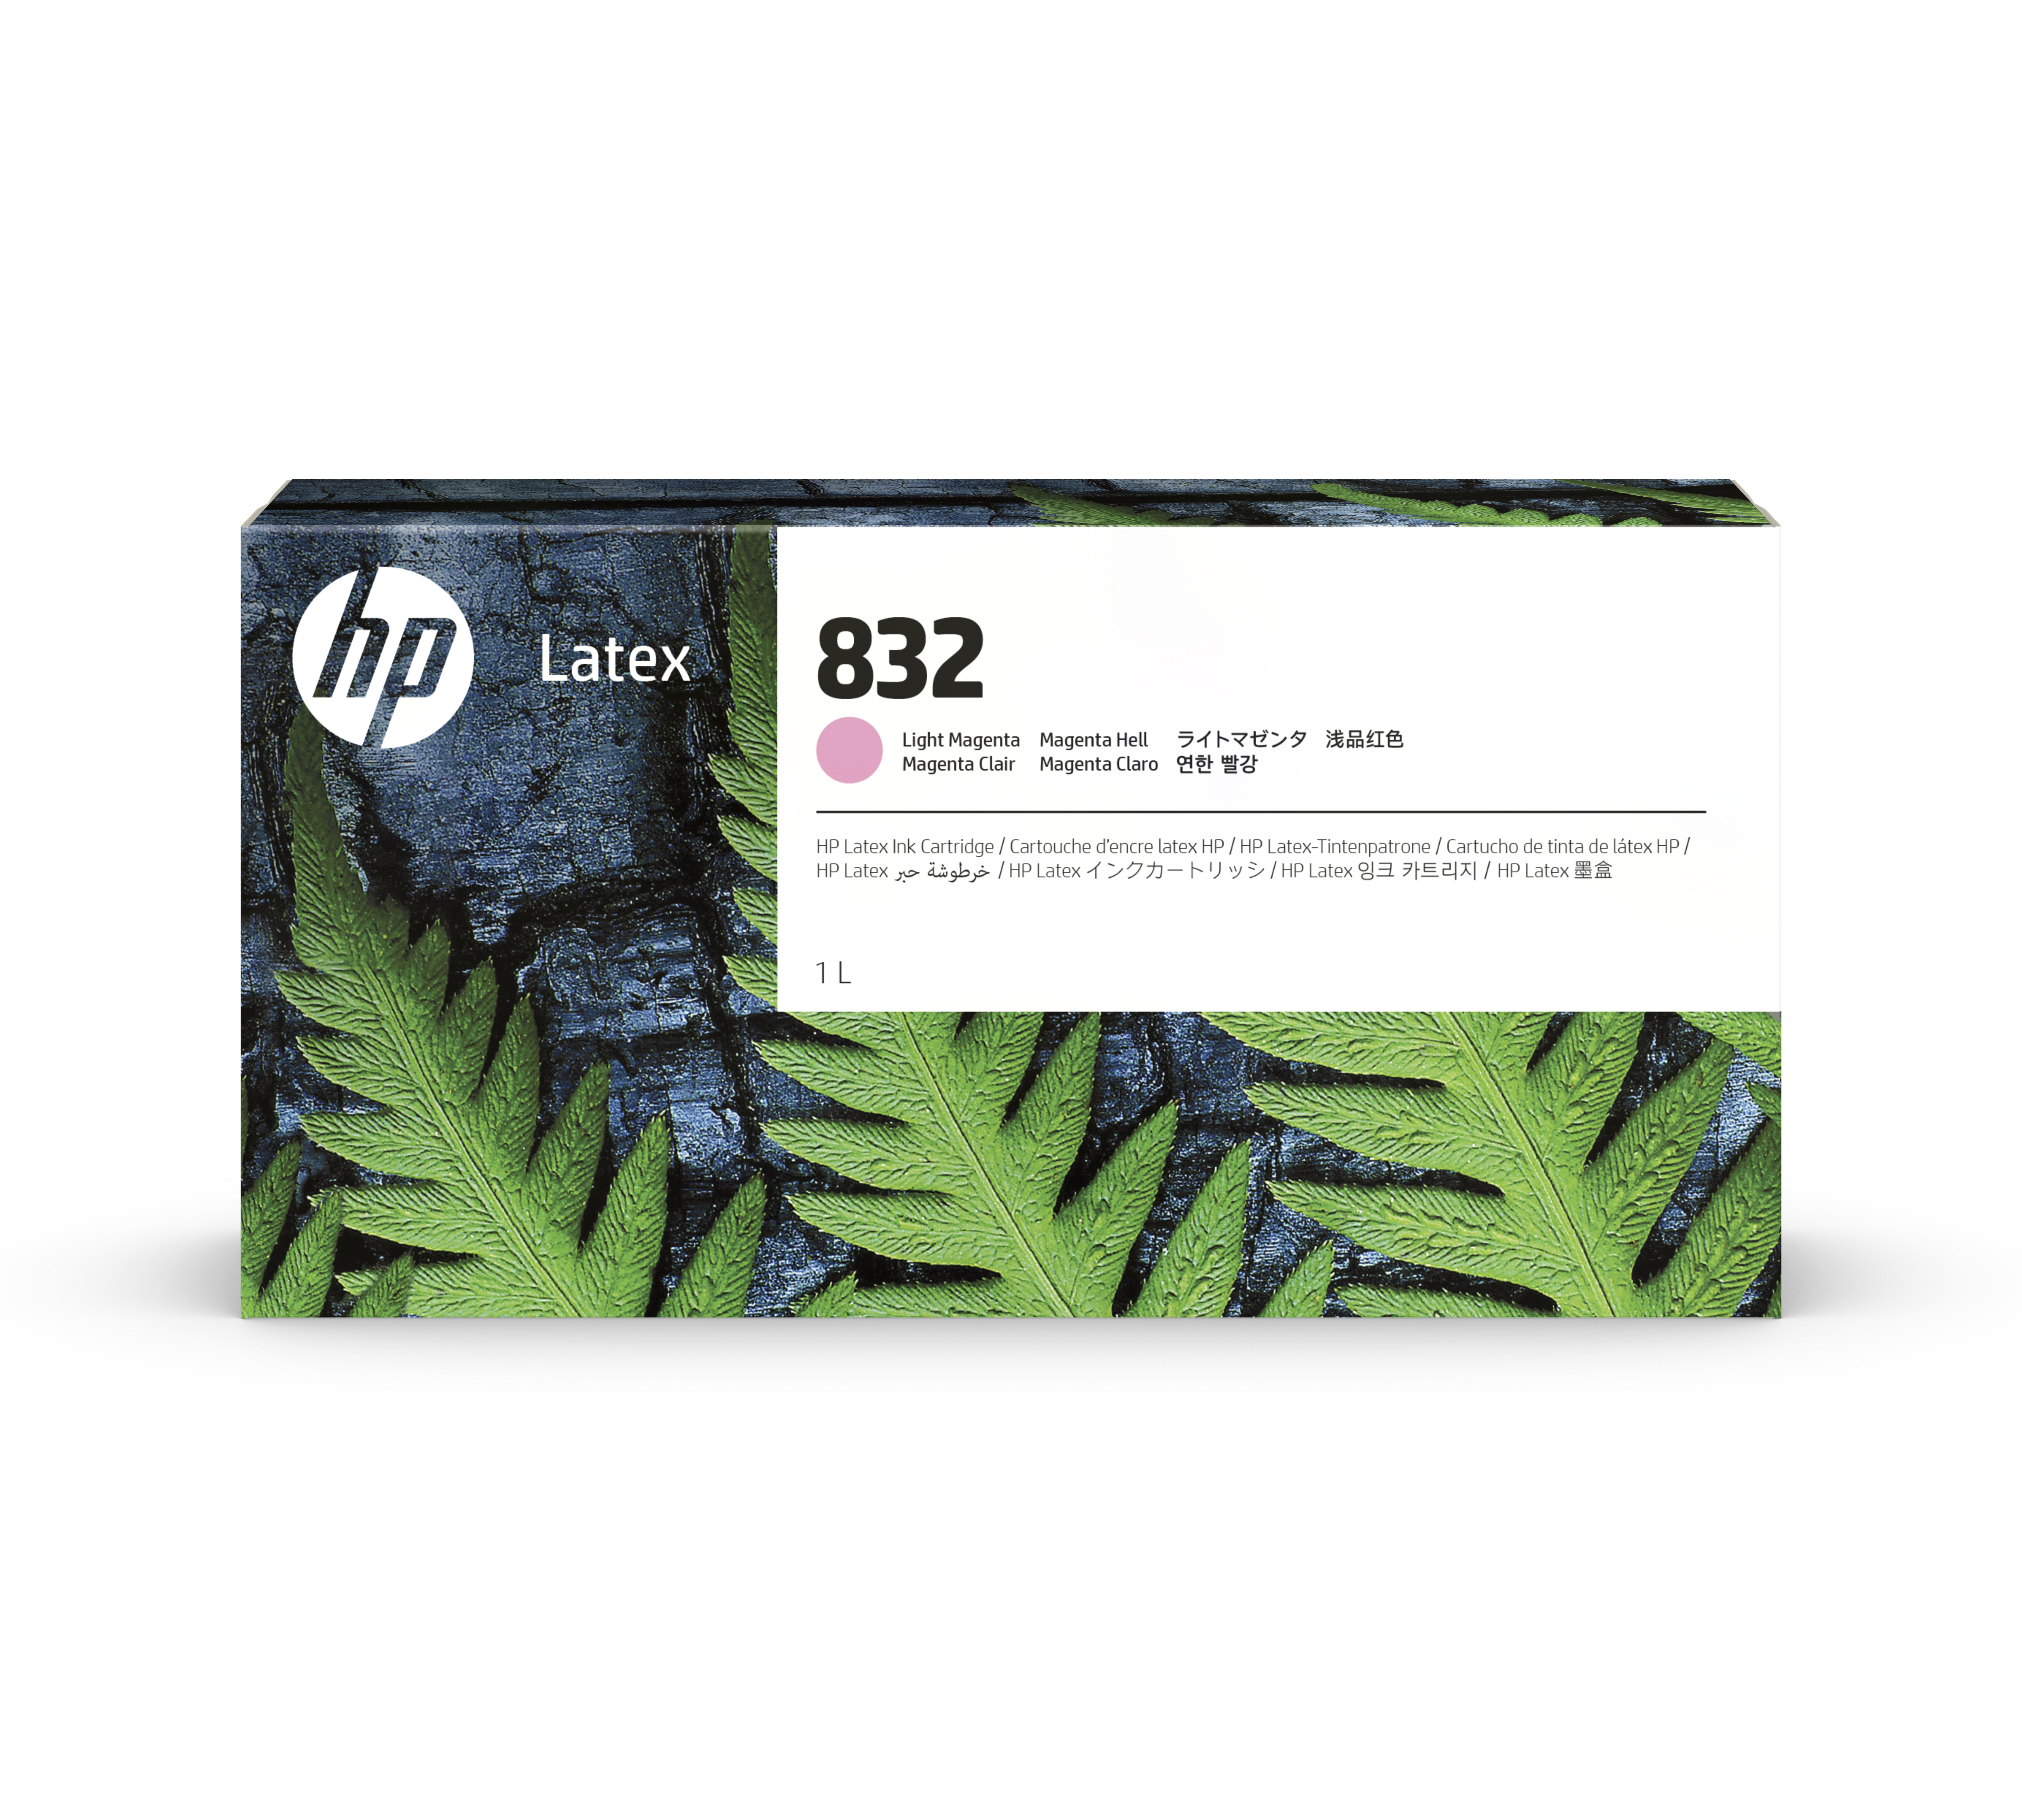 HP 832 Latex Tinte hell magenta - 1 Liter